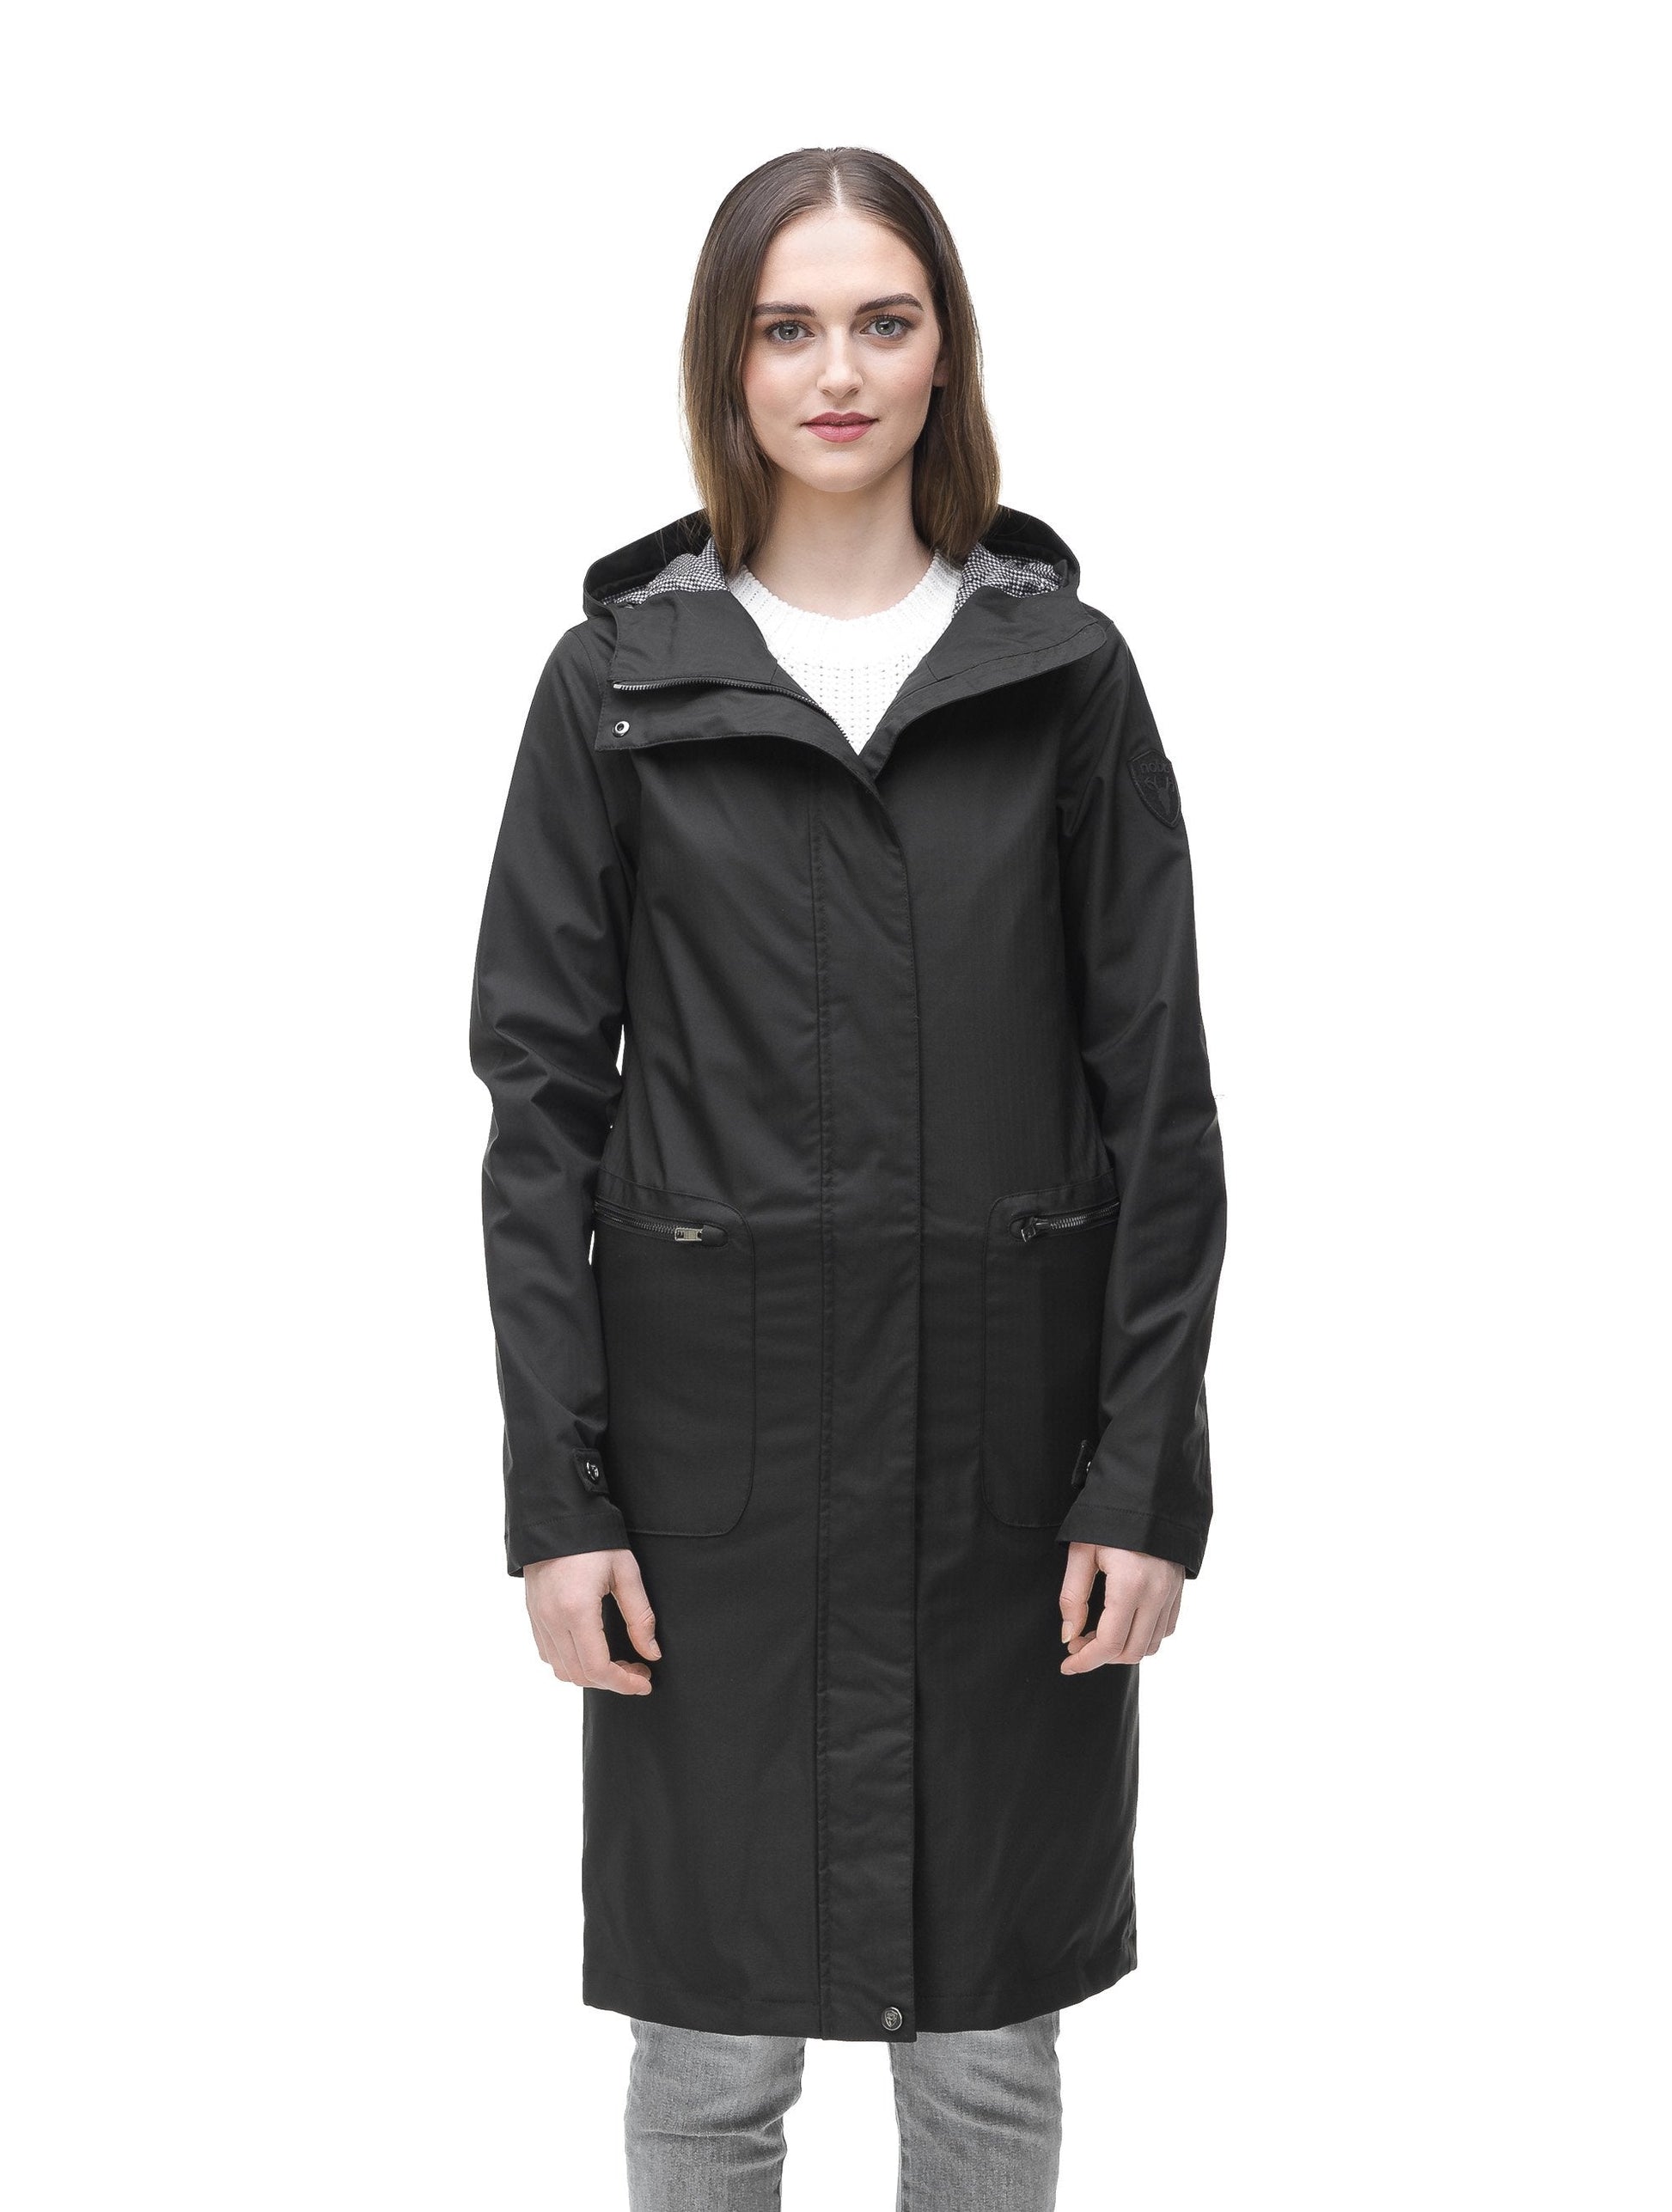 Women's long raincoat with an adjustable hood in Black